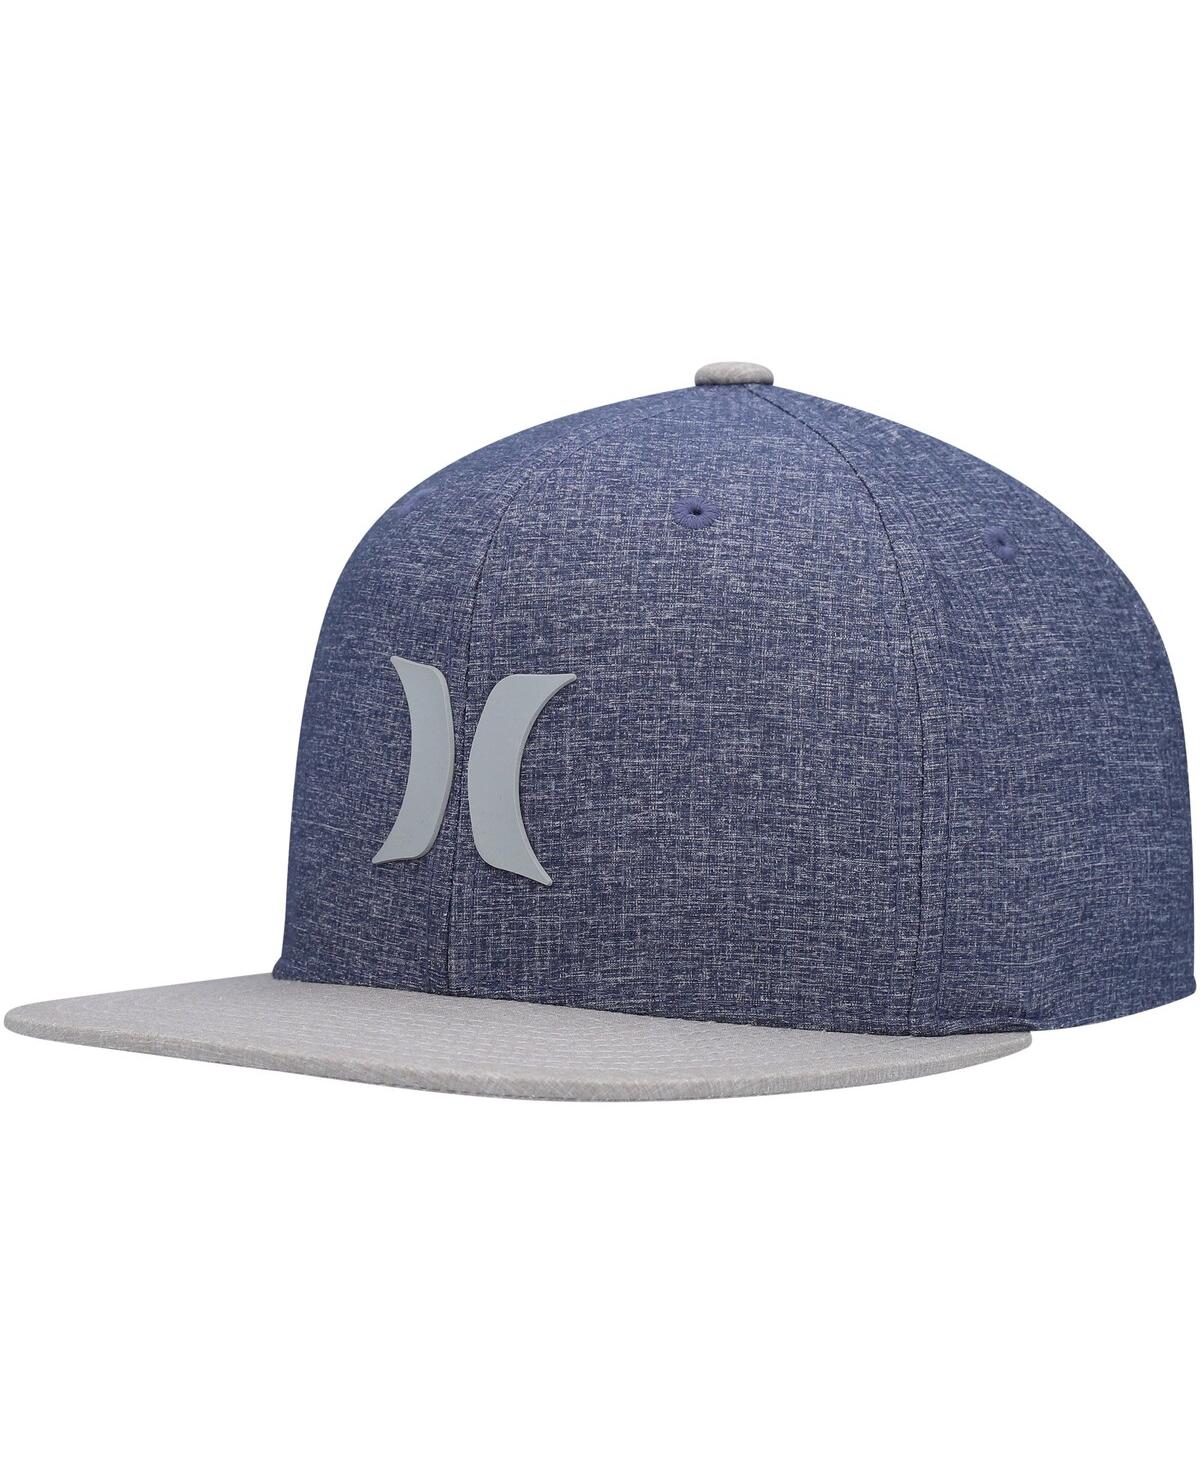 Men's Hurley Blue, Gray Phantom Core Snapback Hat - Blue, Gray